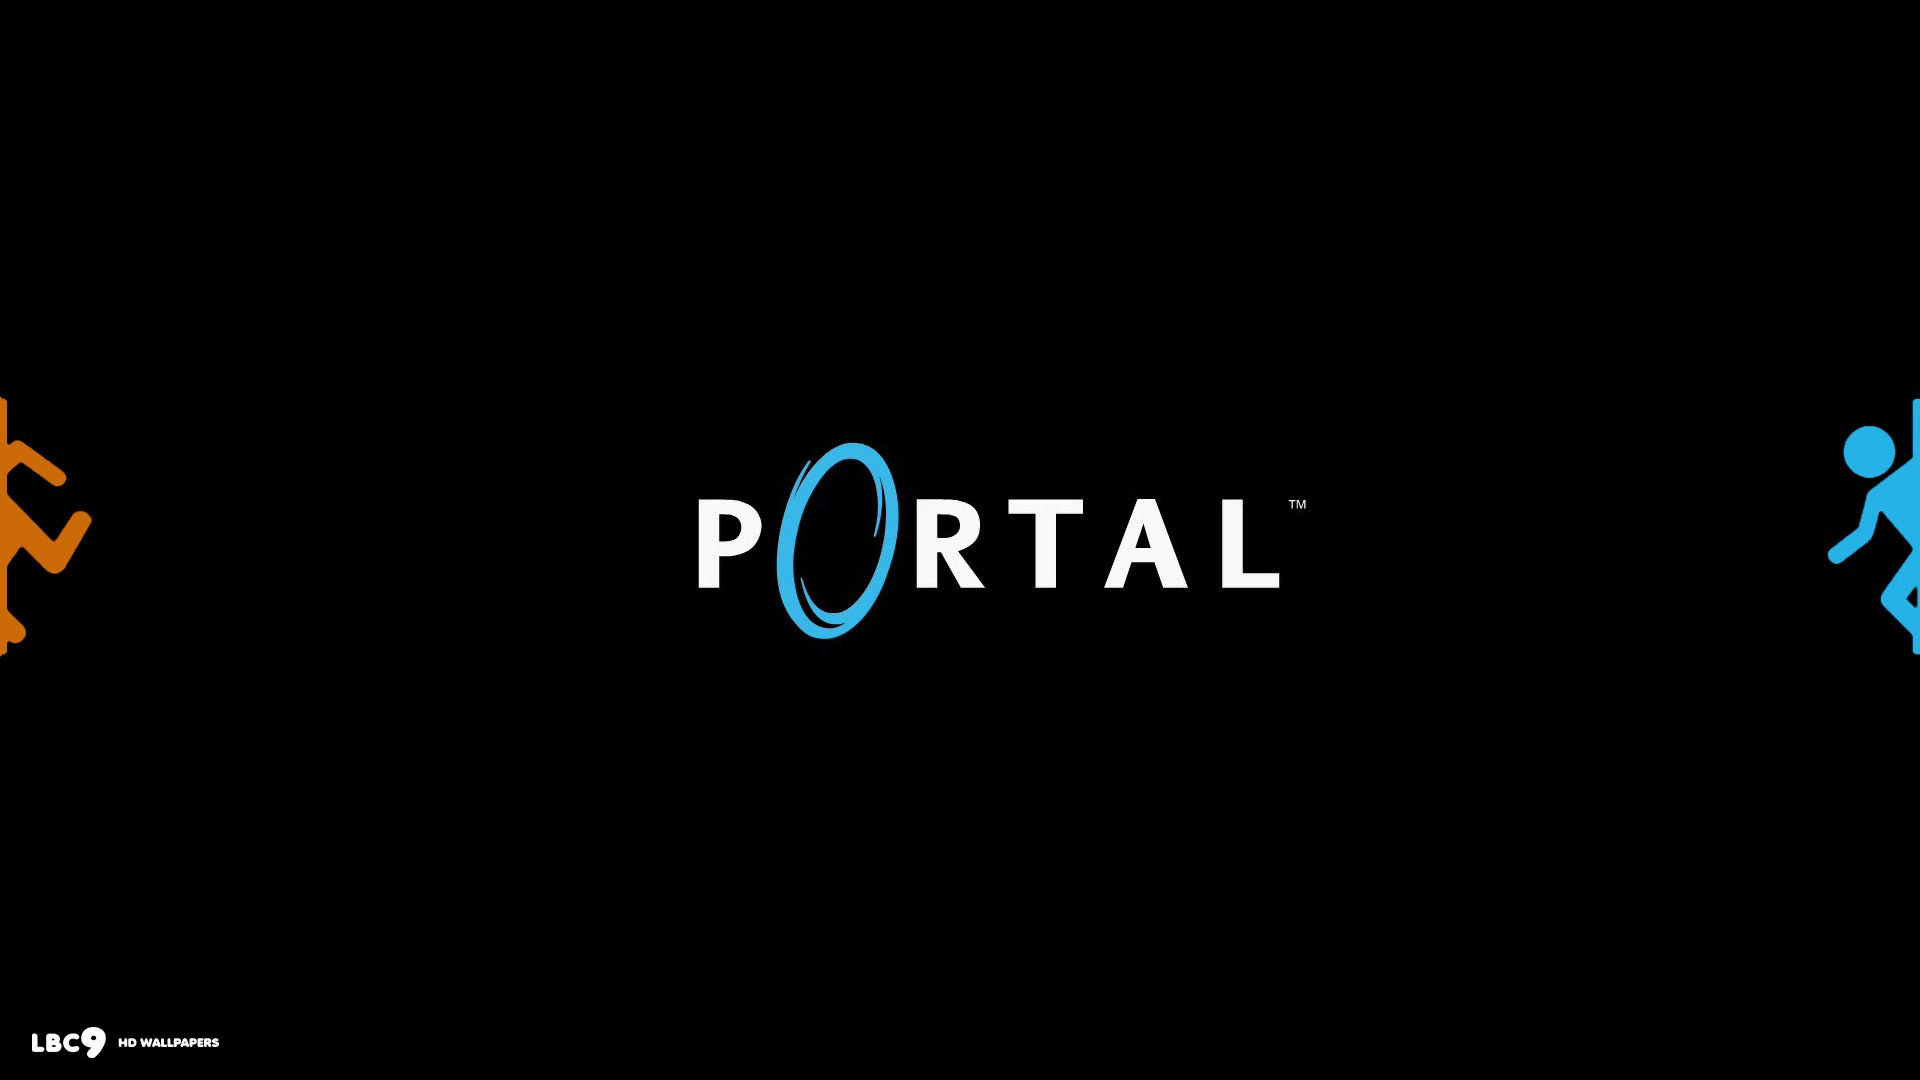 Portal wallpaper 10 / 17 platform games hd backgrounds